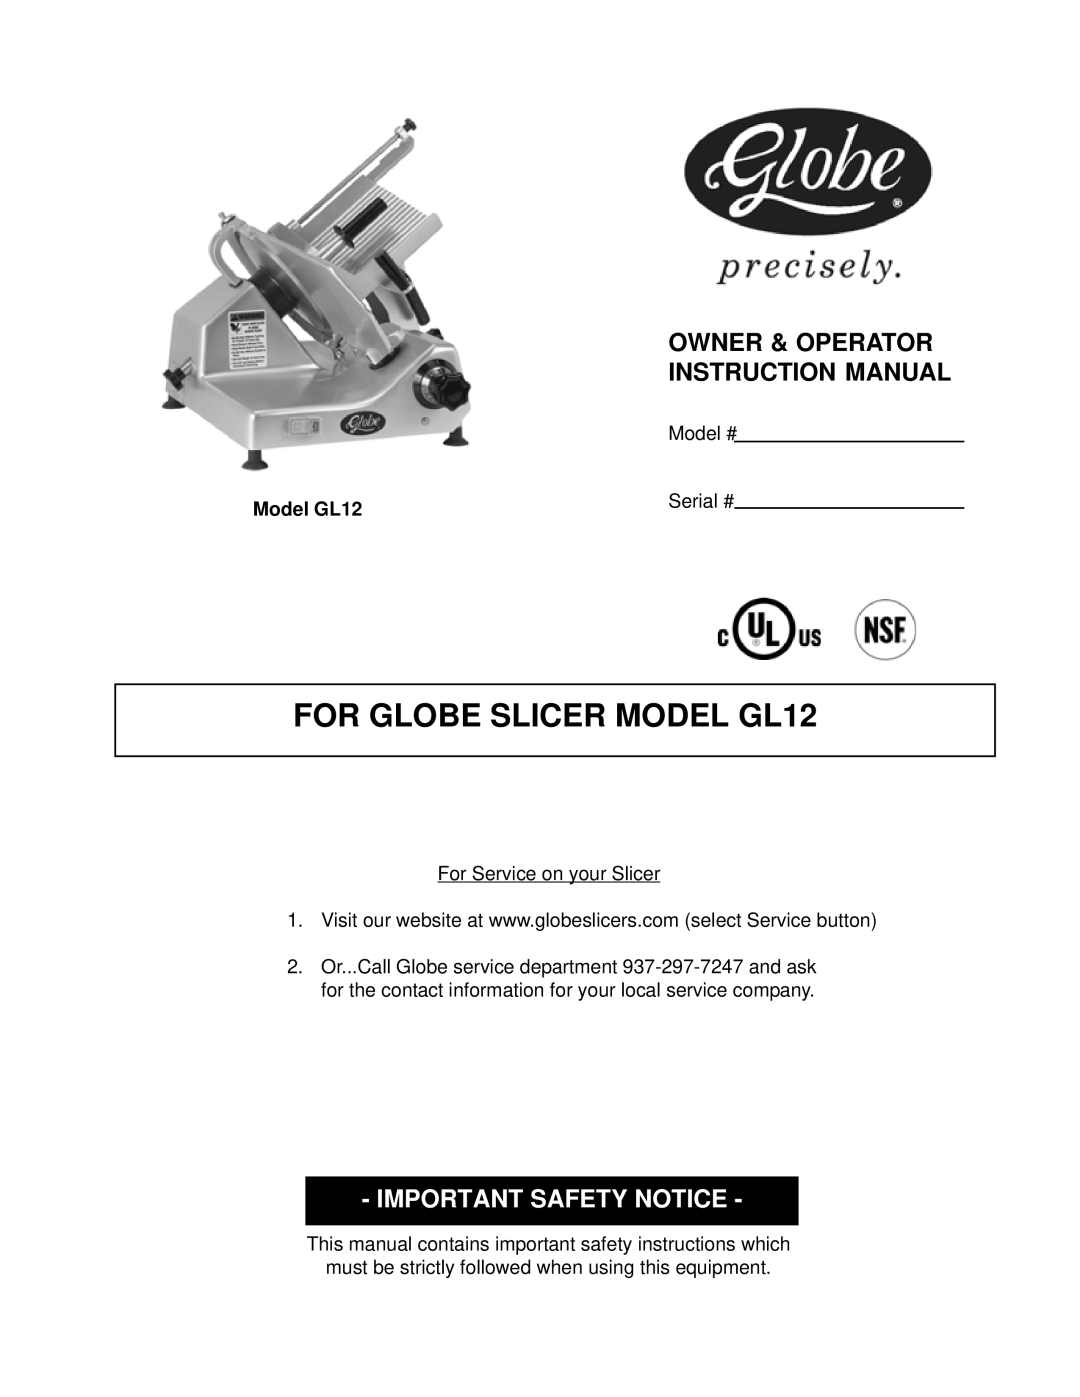 Globe instruction manual FOR GLOBE SLICER MODEL GL12, Important Safety Notice 